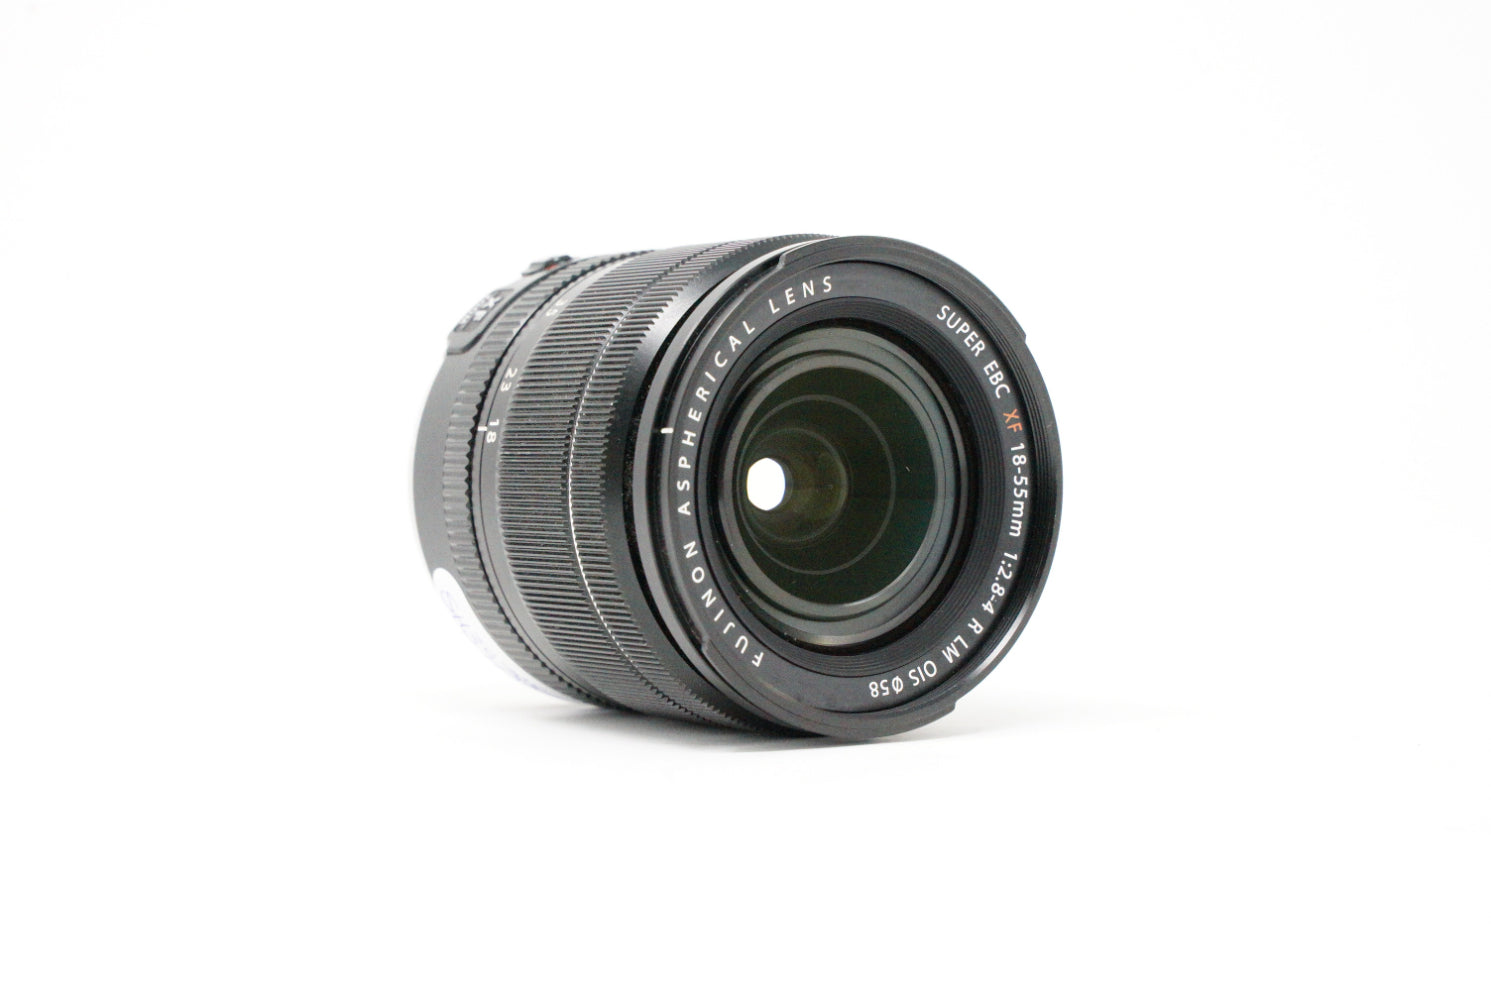 Fujifilm XF 18-55mm F2.8-4 R LM OIS Lens with hood